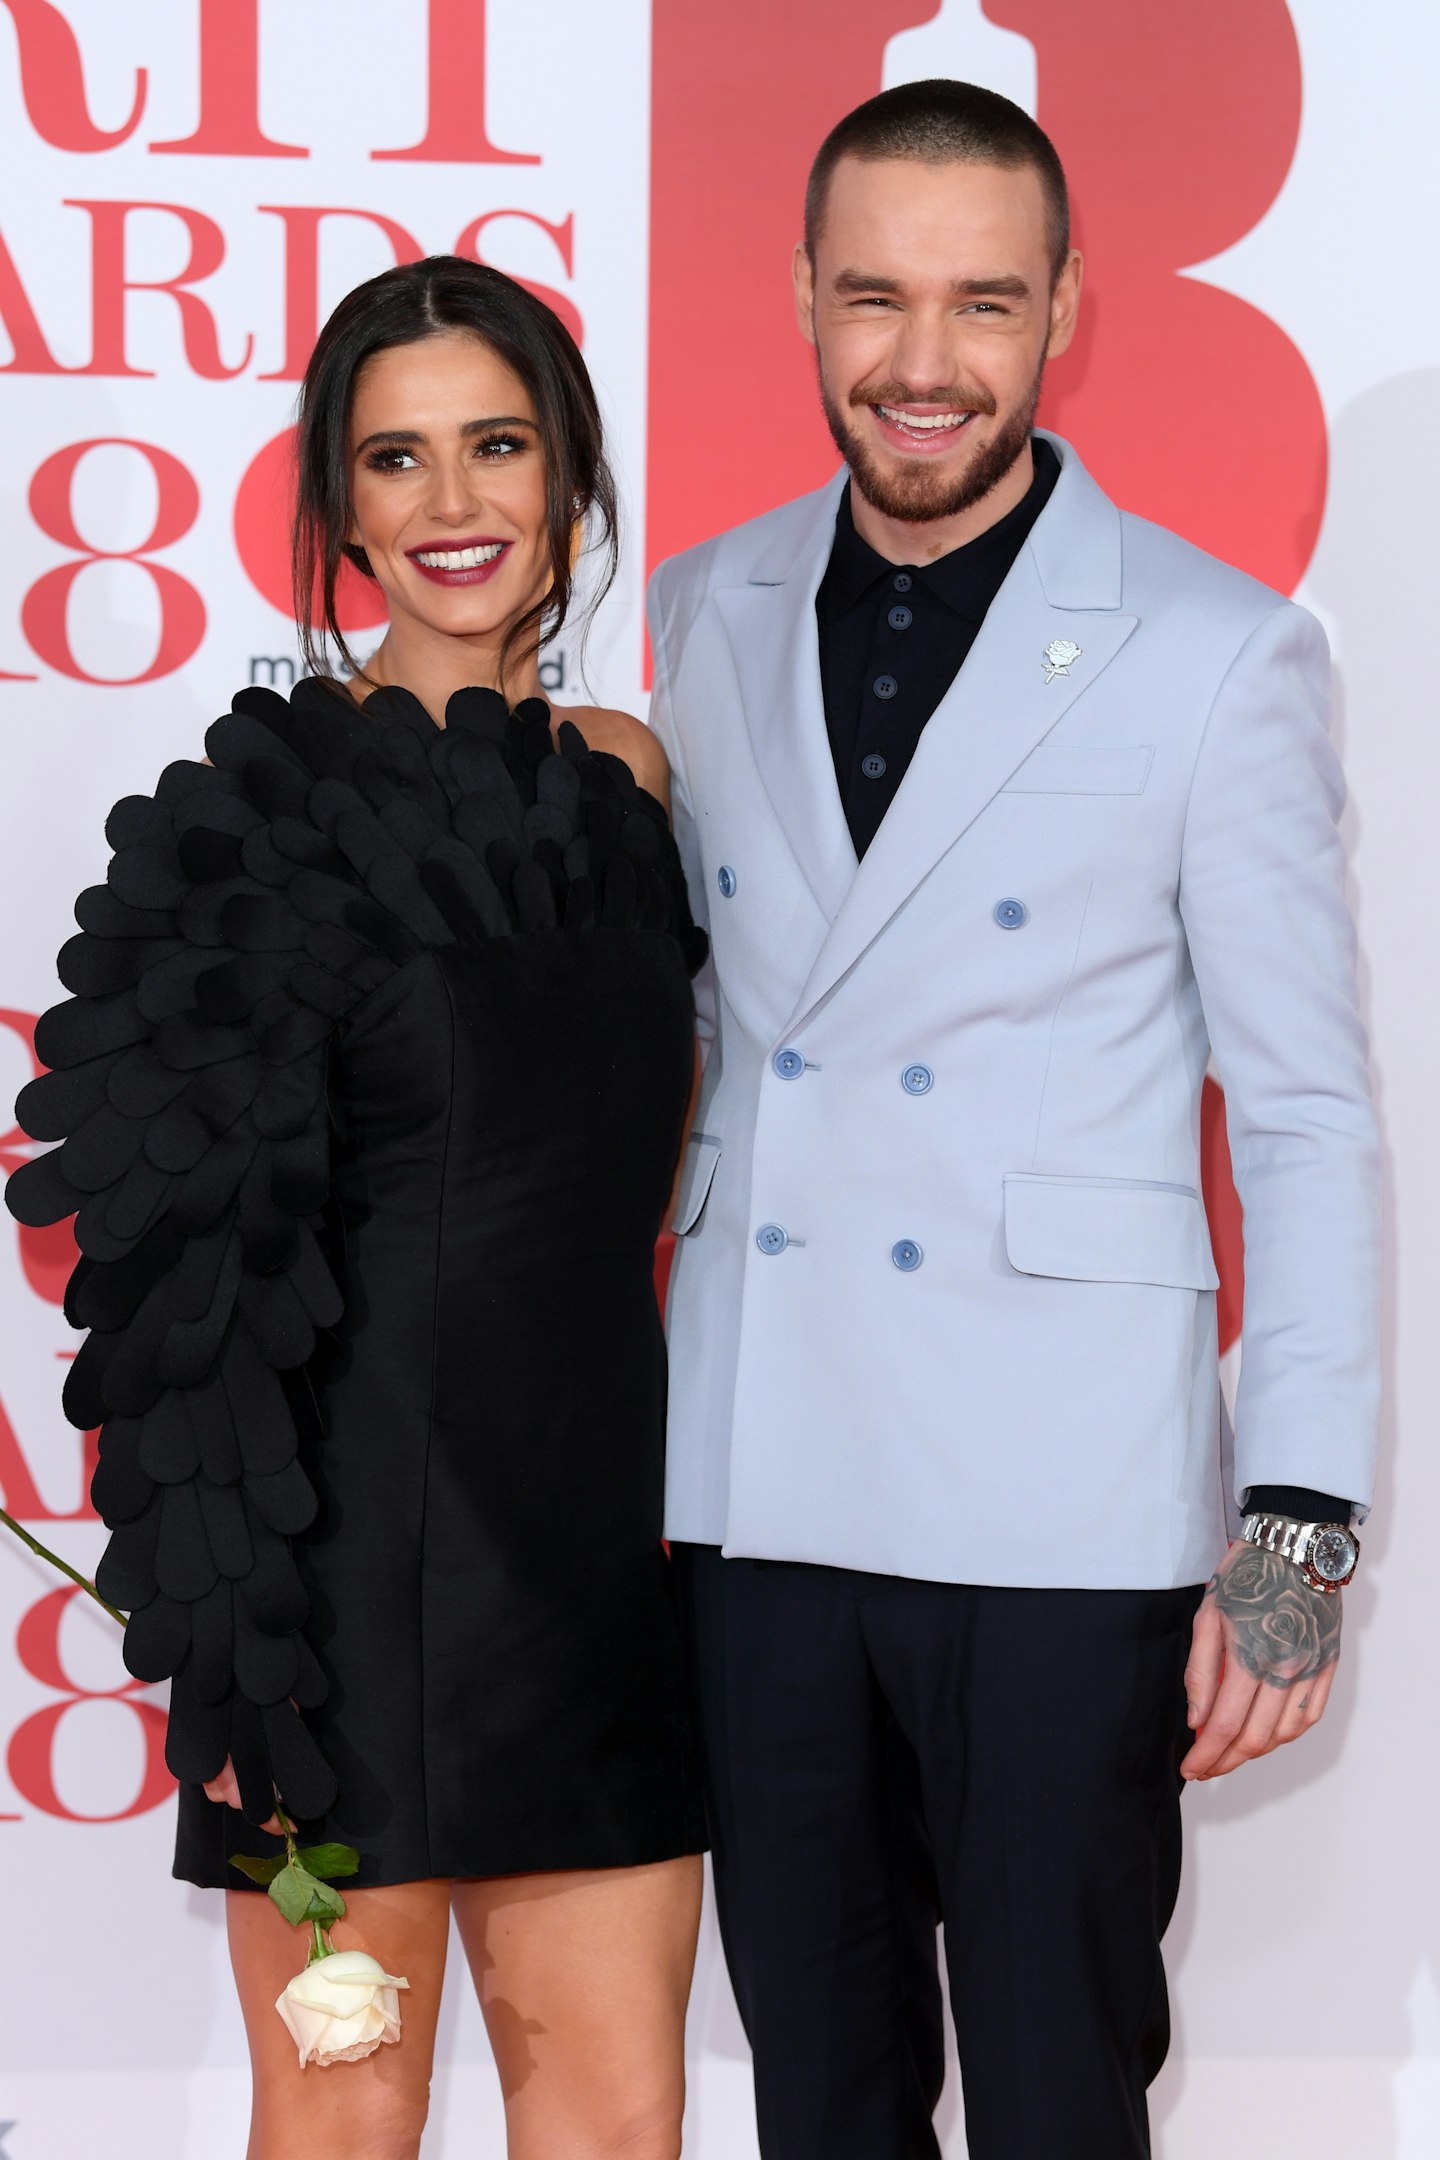 Cheryl Tweedy and Liam Payne at The Brit Awards